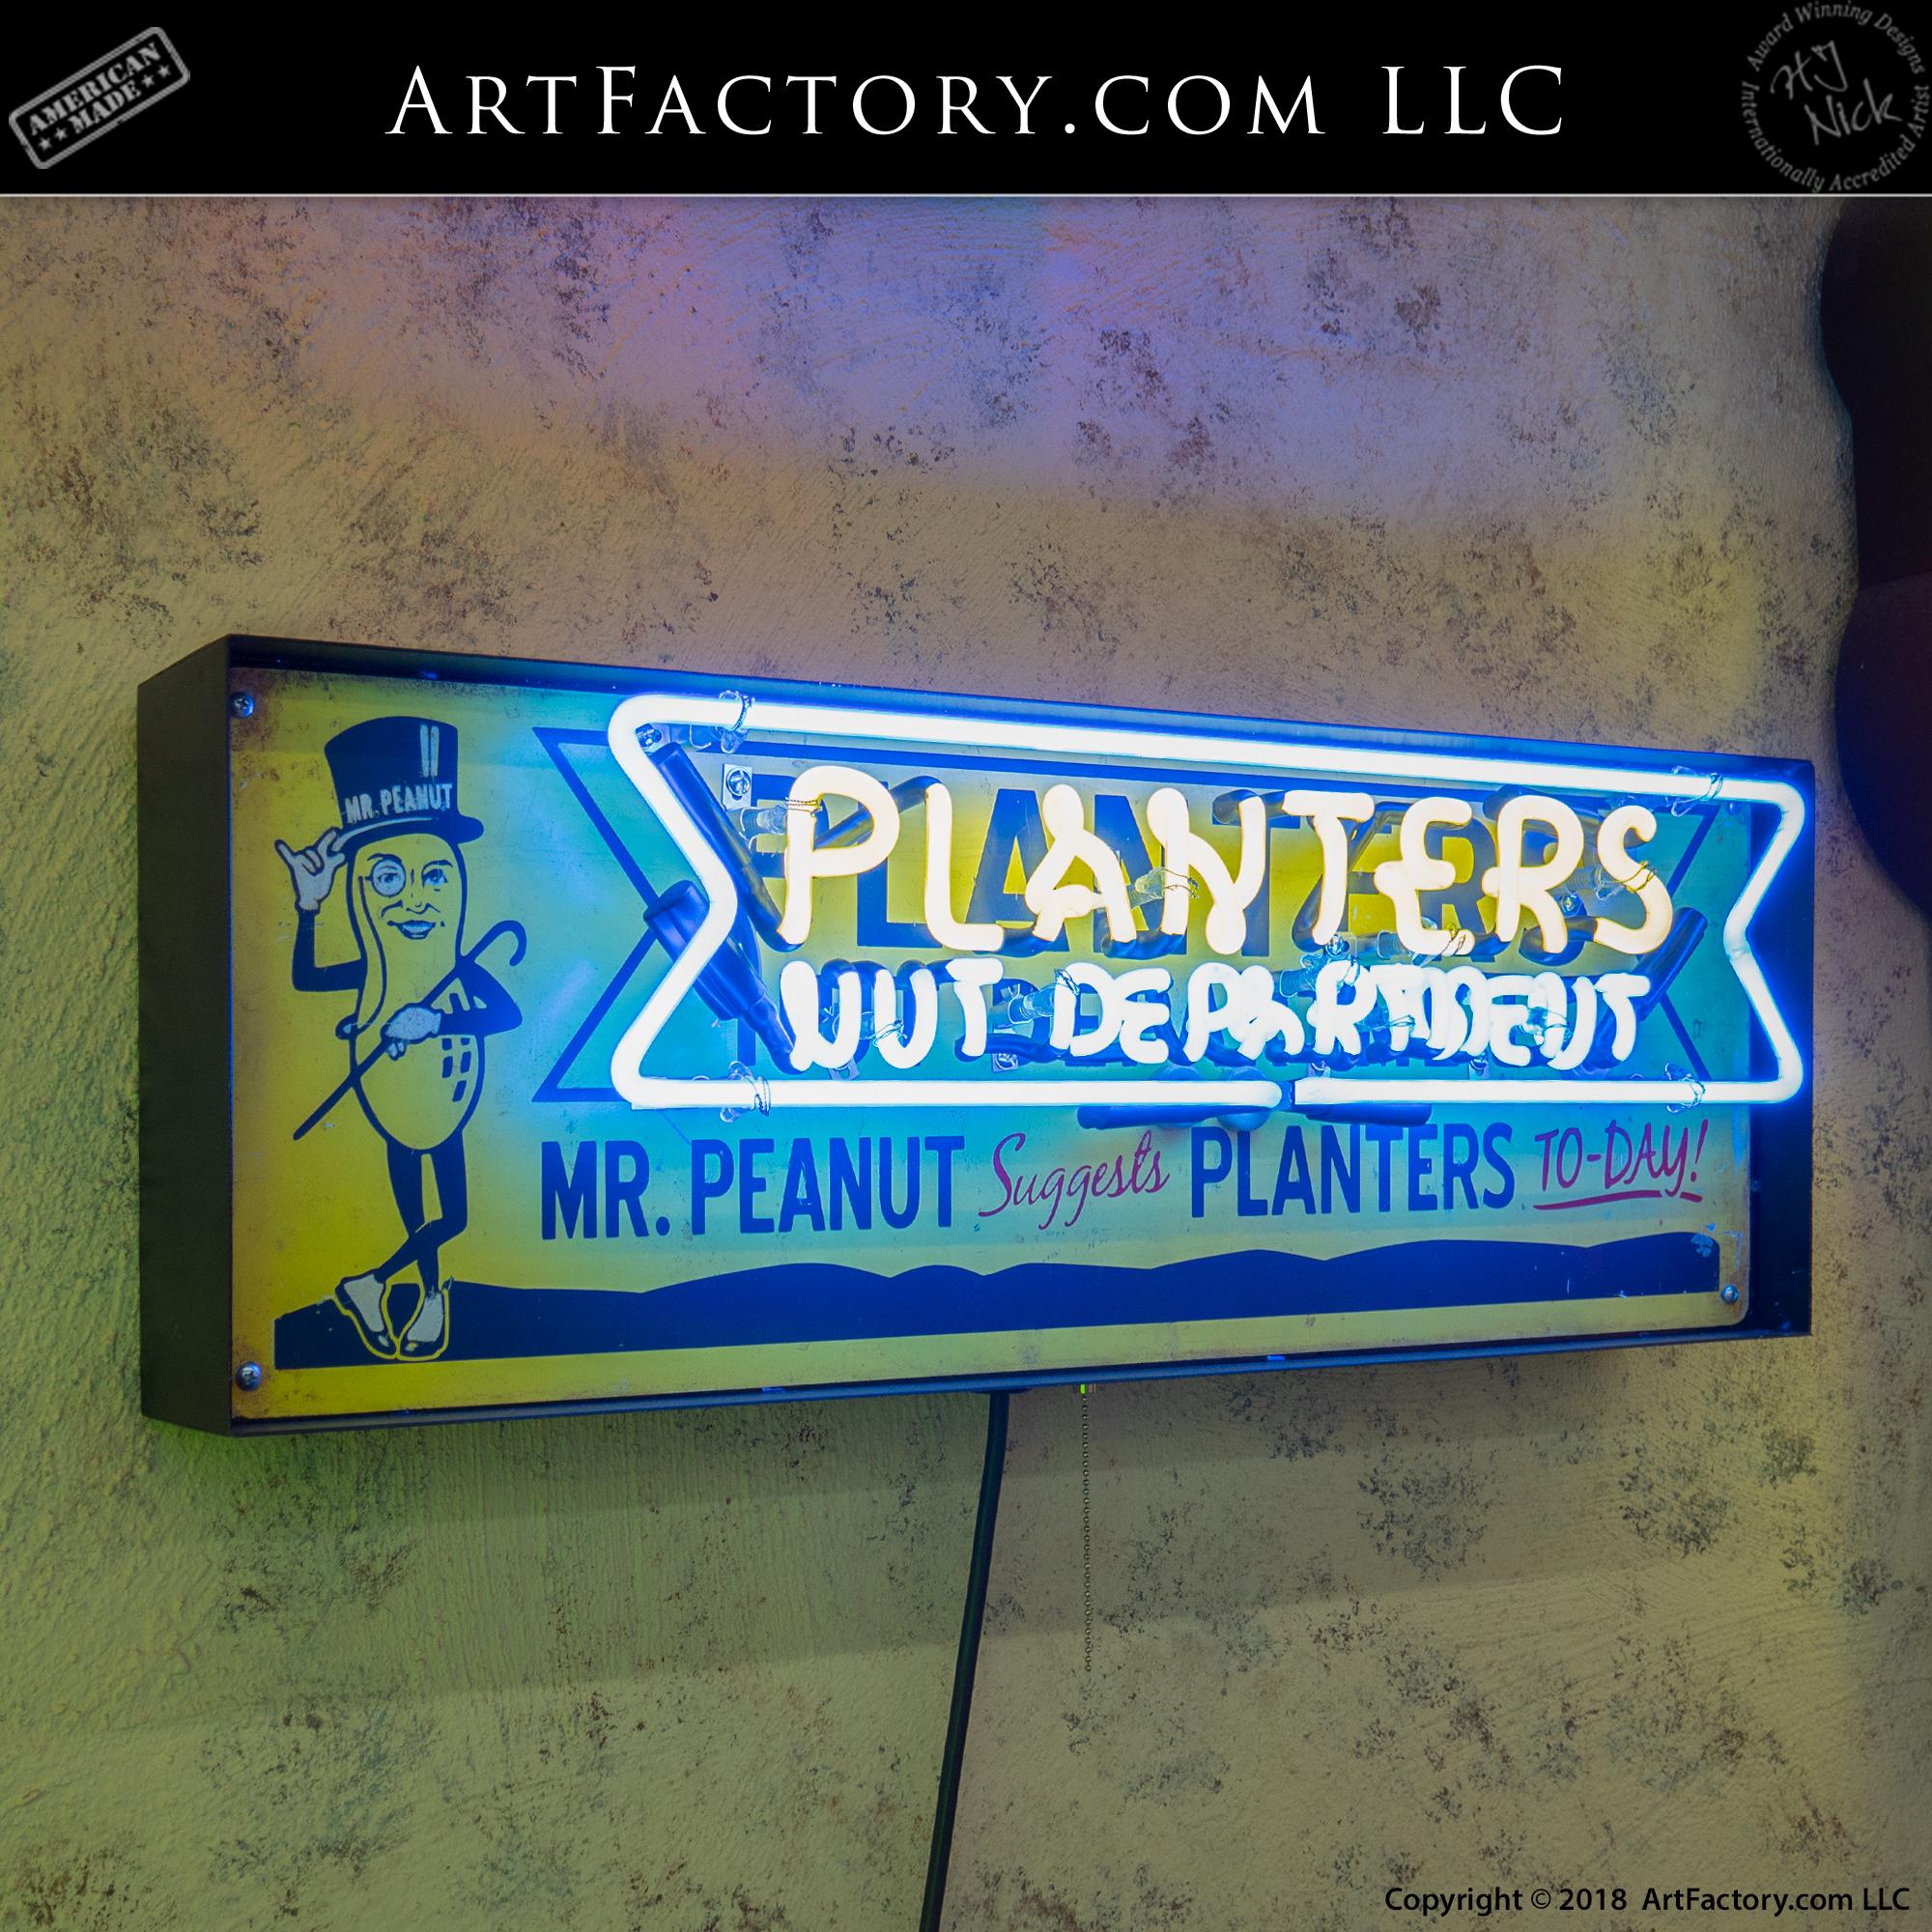 Vintage Mr. Peanut Planters Nut Department Neon Sign